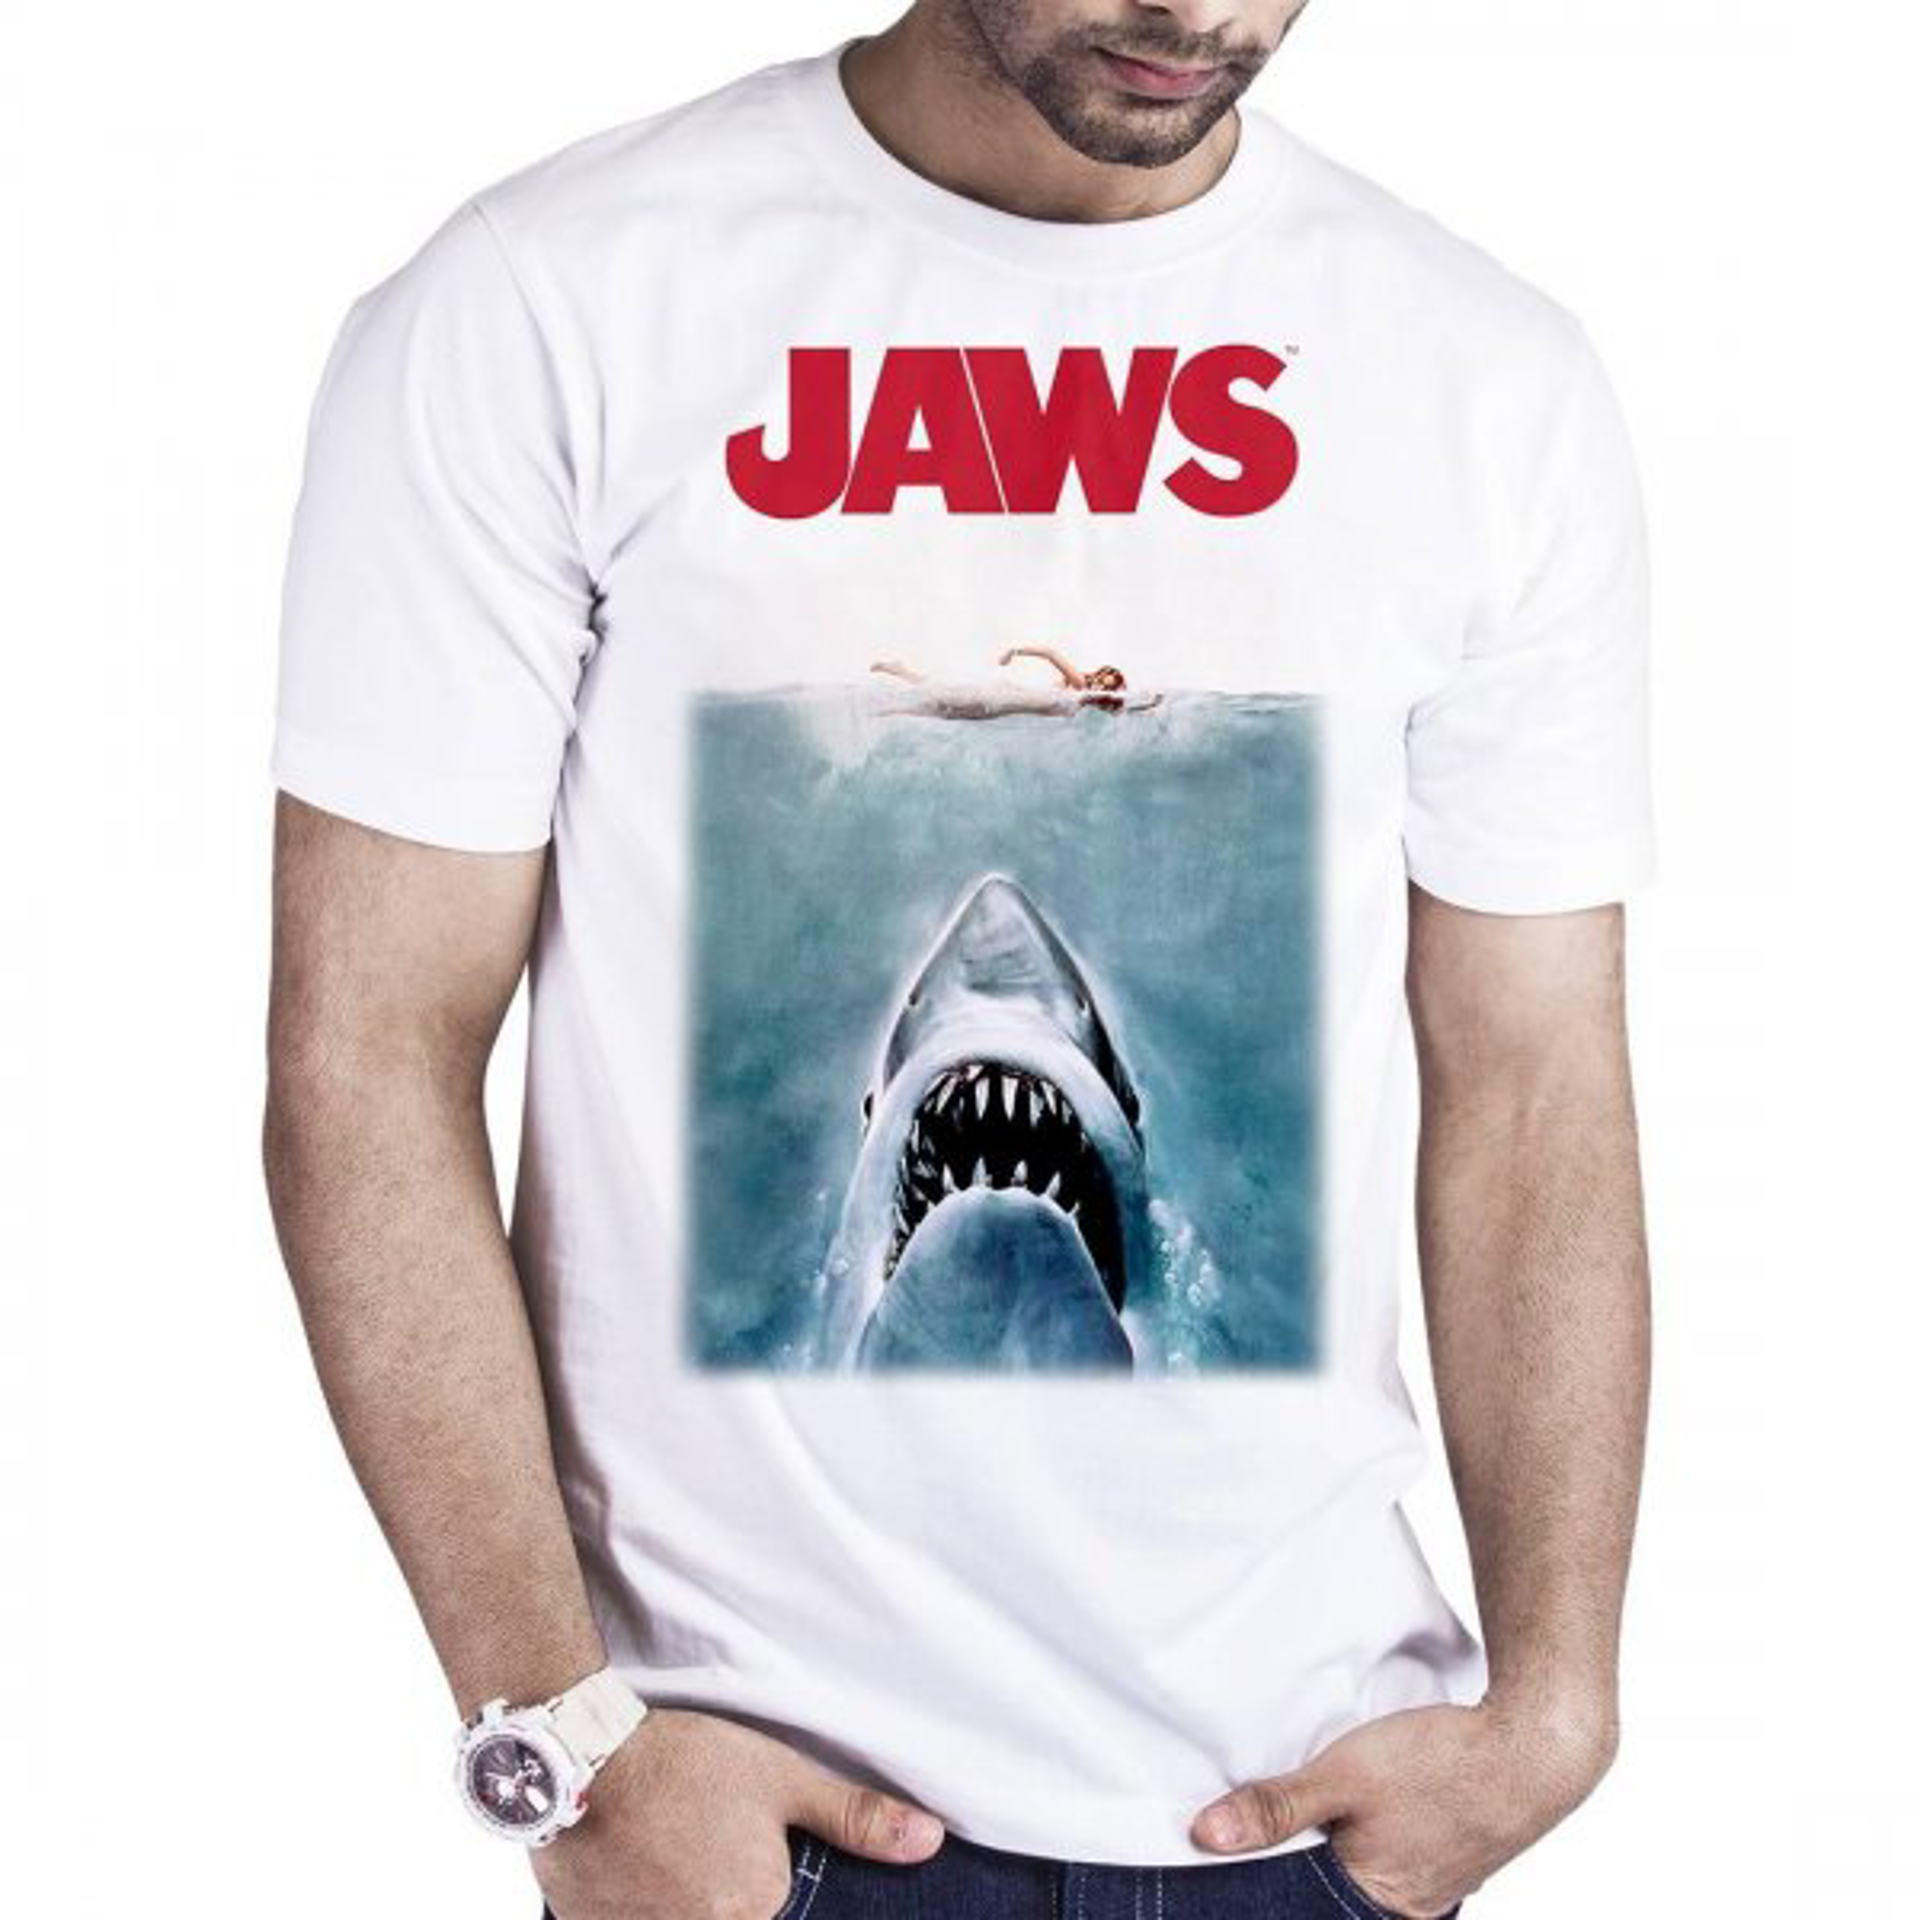 Jaws - Original Poster White T-Shirt XXL